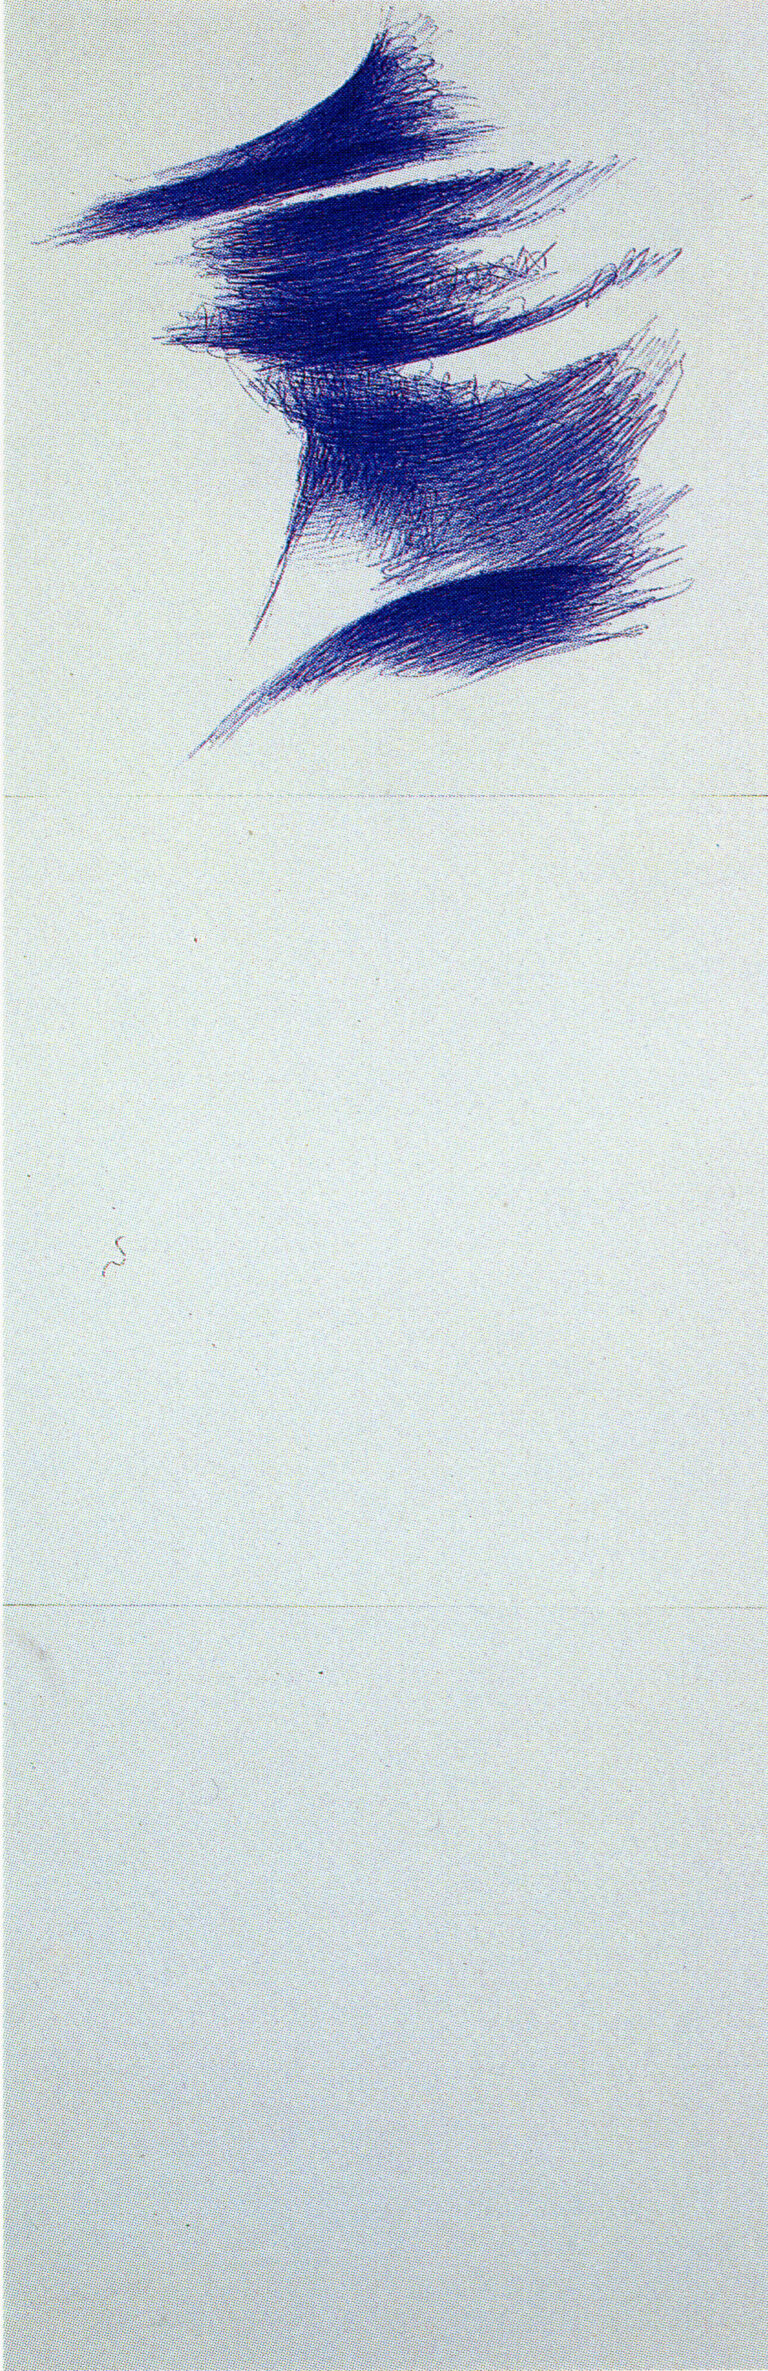 1989 - penna a sfera su carta intelata - cm 103,5x34,5